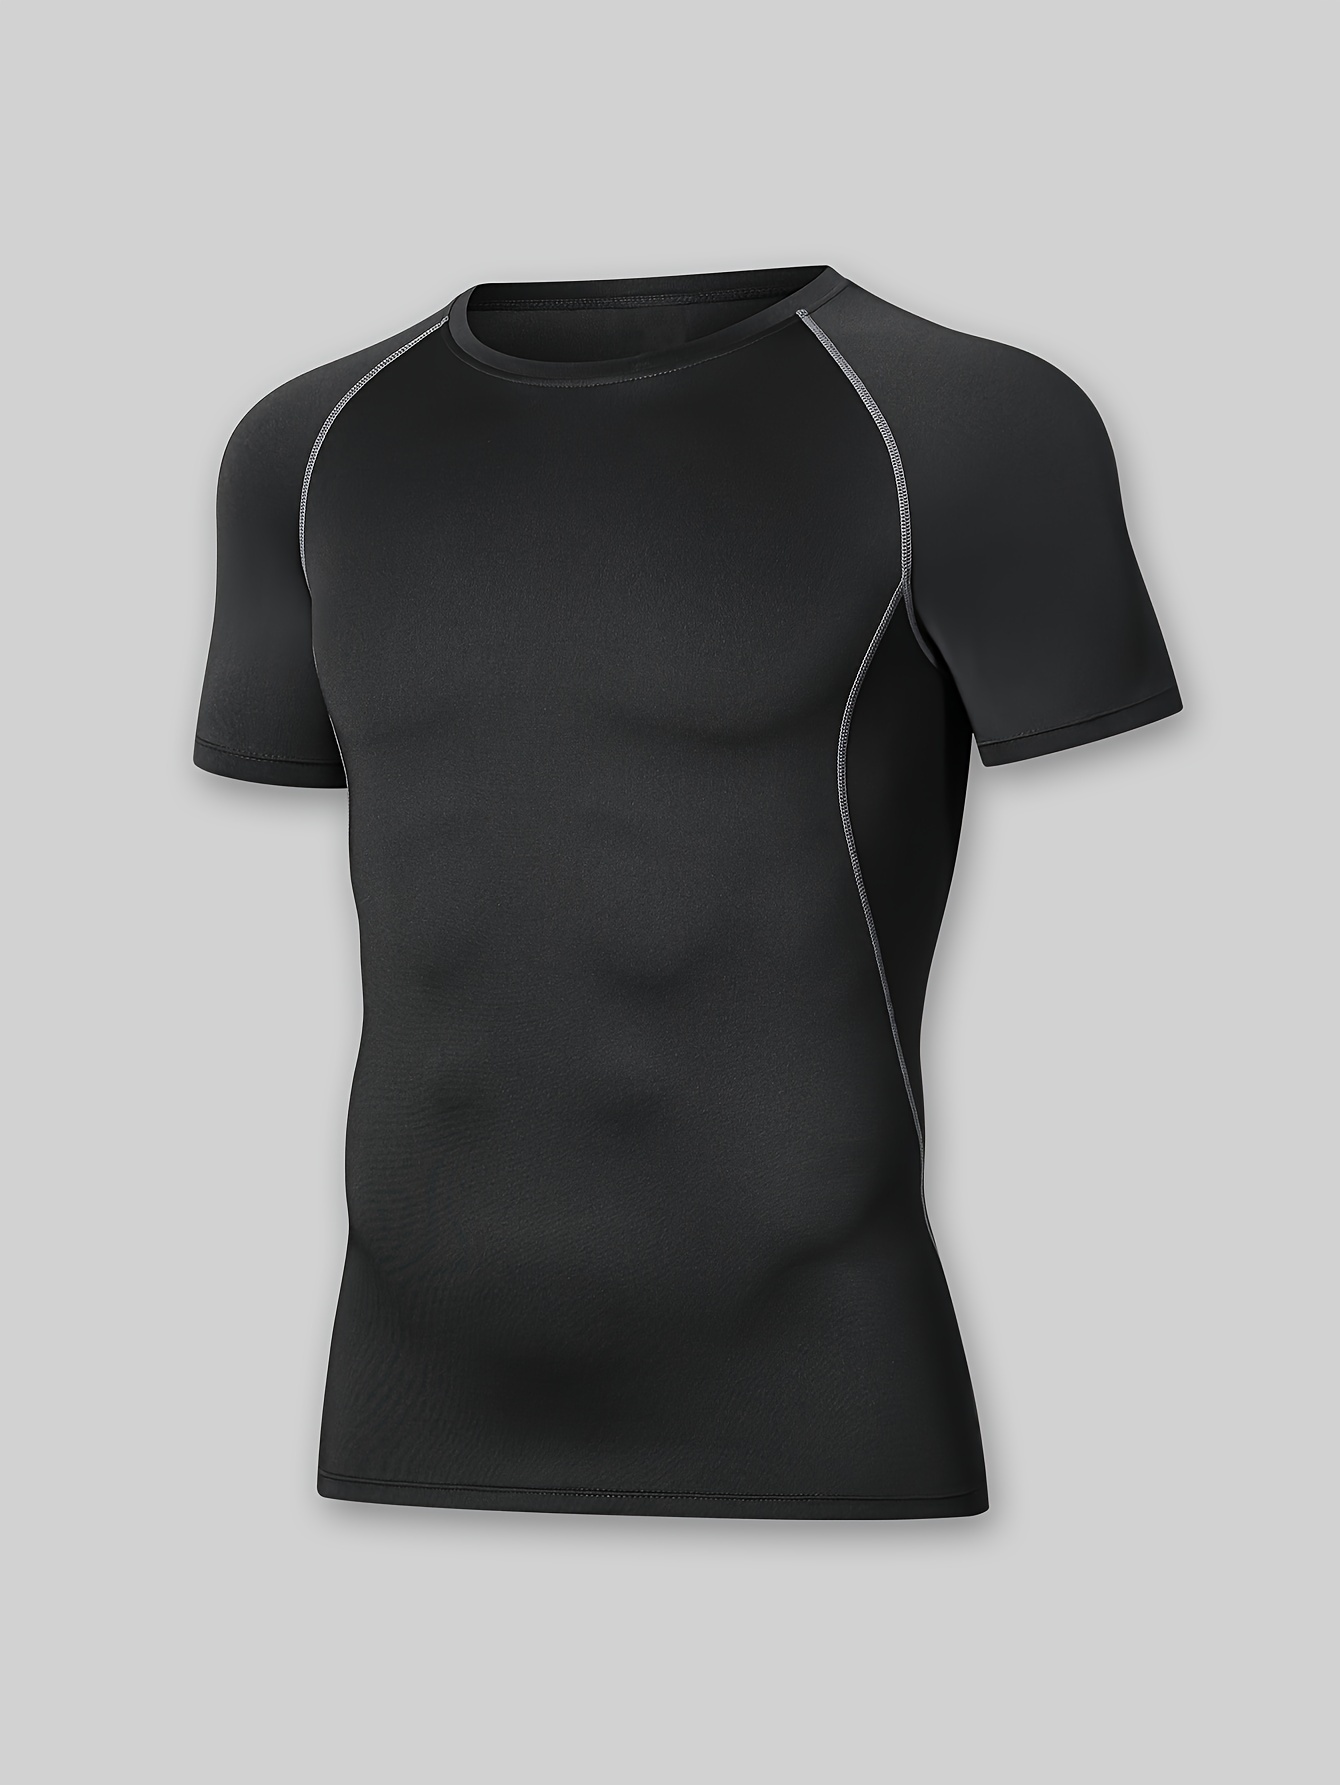 Tummy Control Basic Compression Short Sleeve Shirt, U-neck Sports  Tight-fitting Top, Women's Clothing